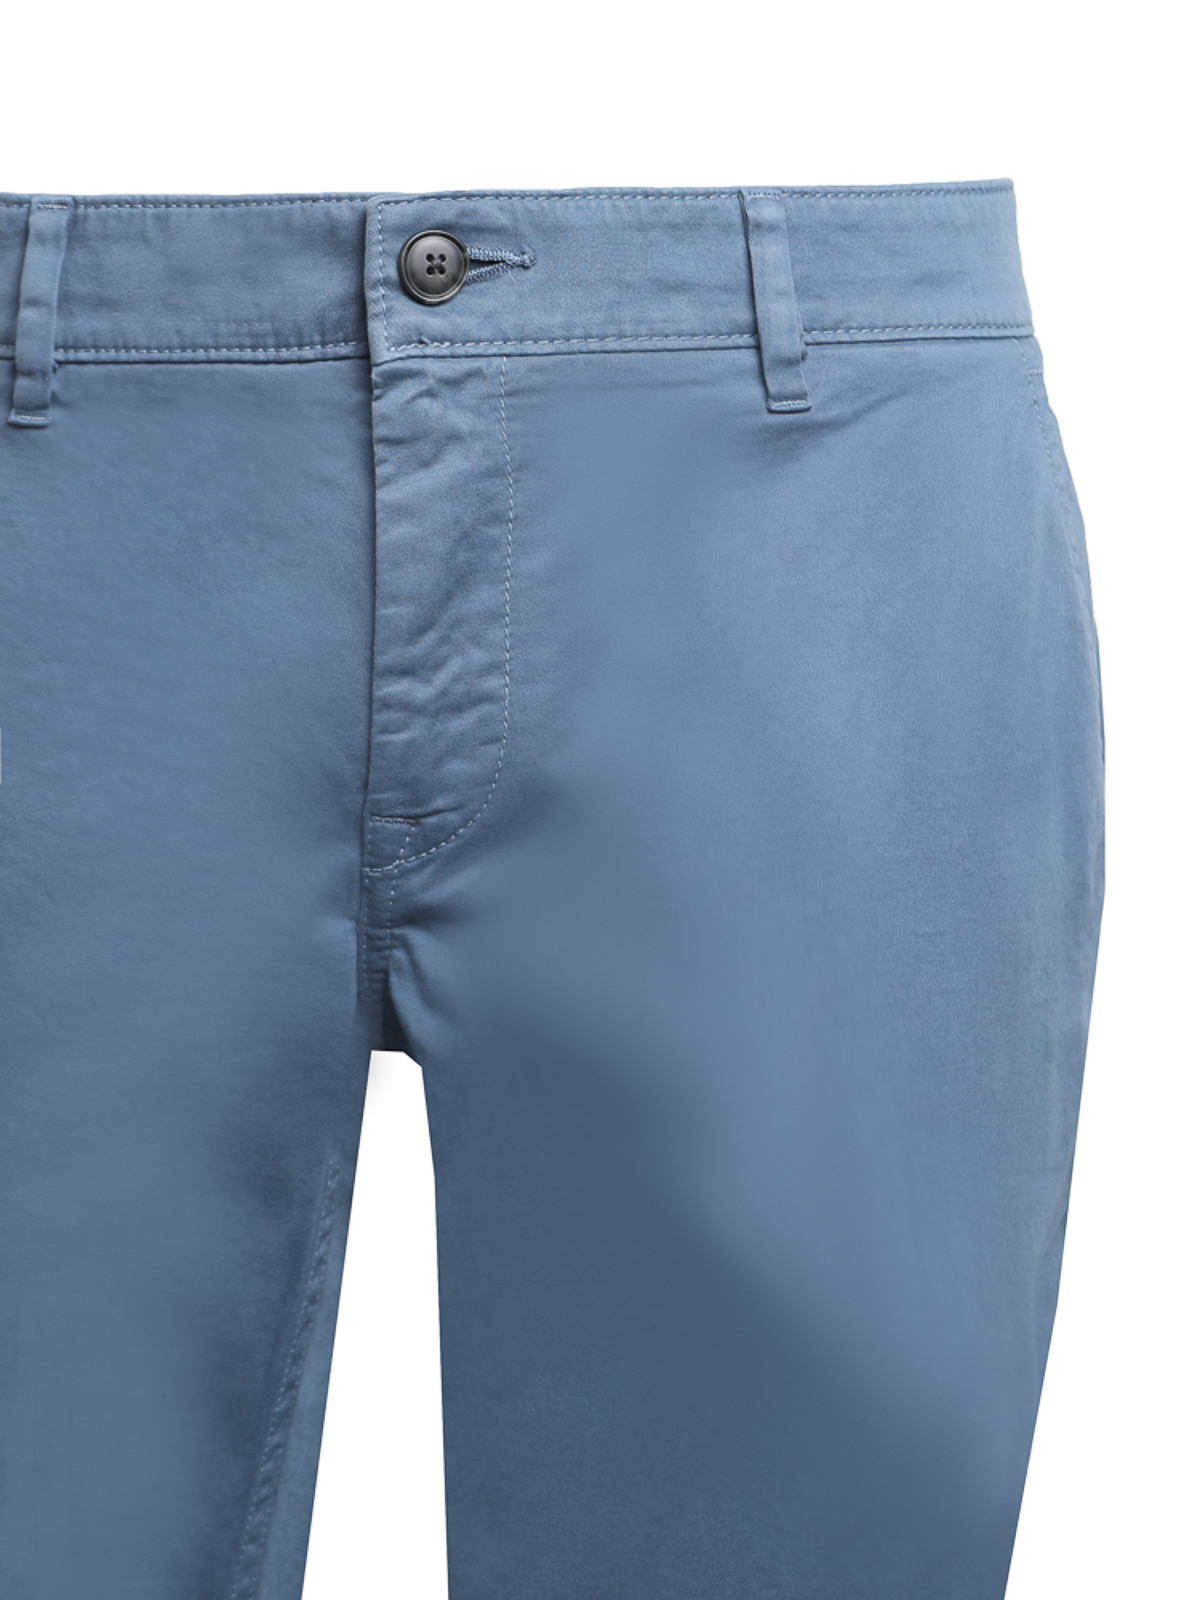 Hugo Boss Trousers Mens India  Hugo Boss Clothing Sale Online